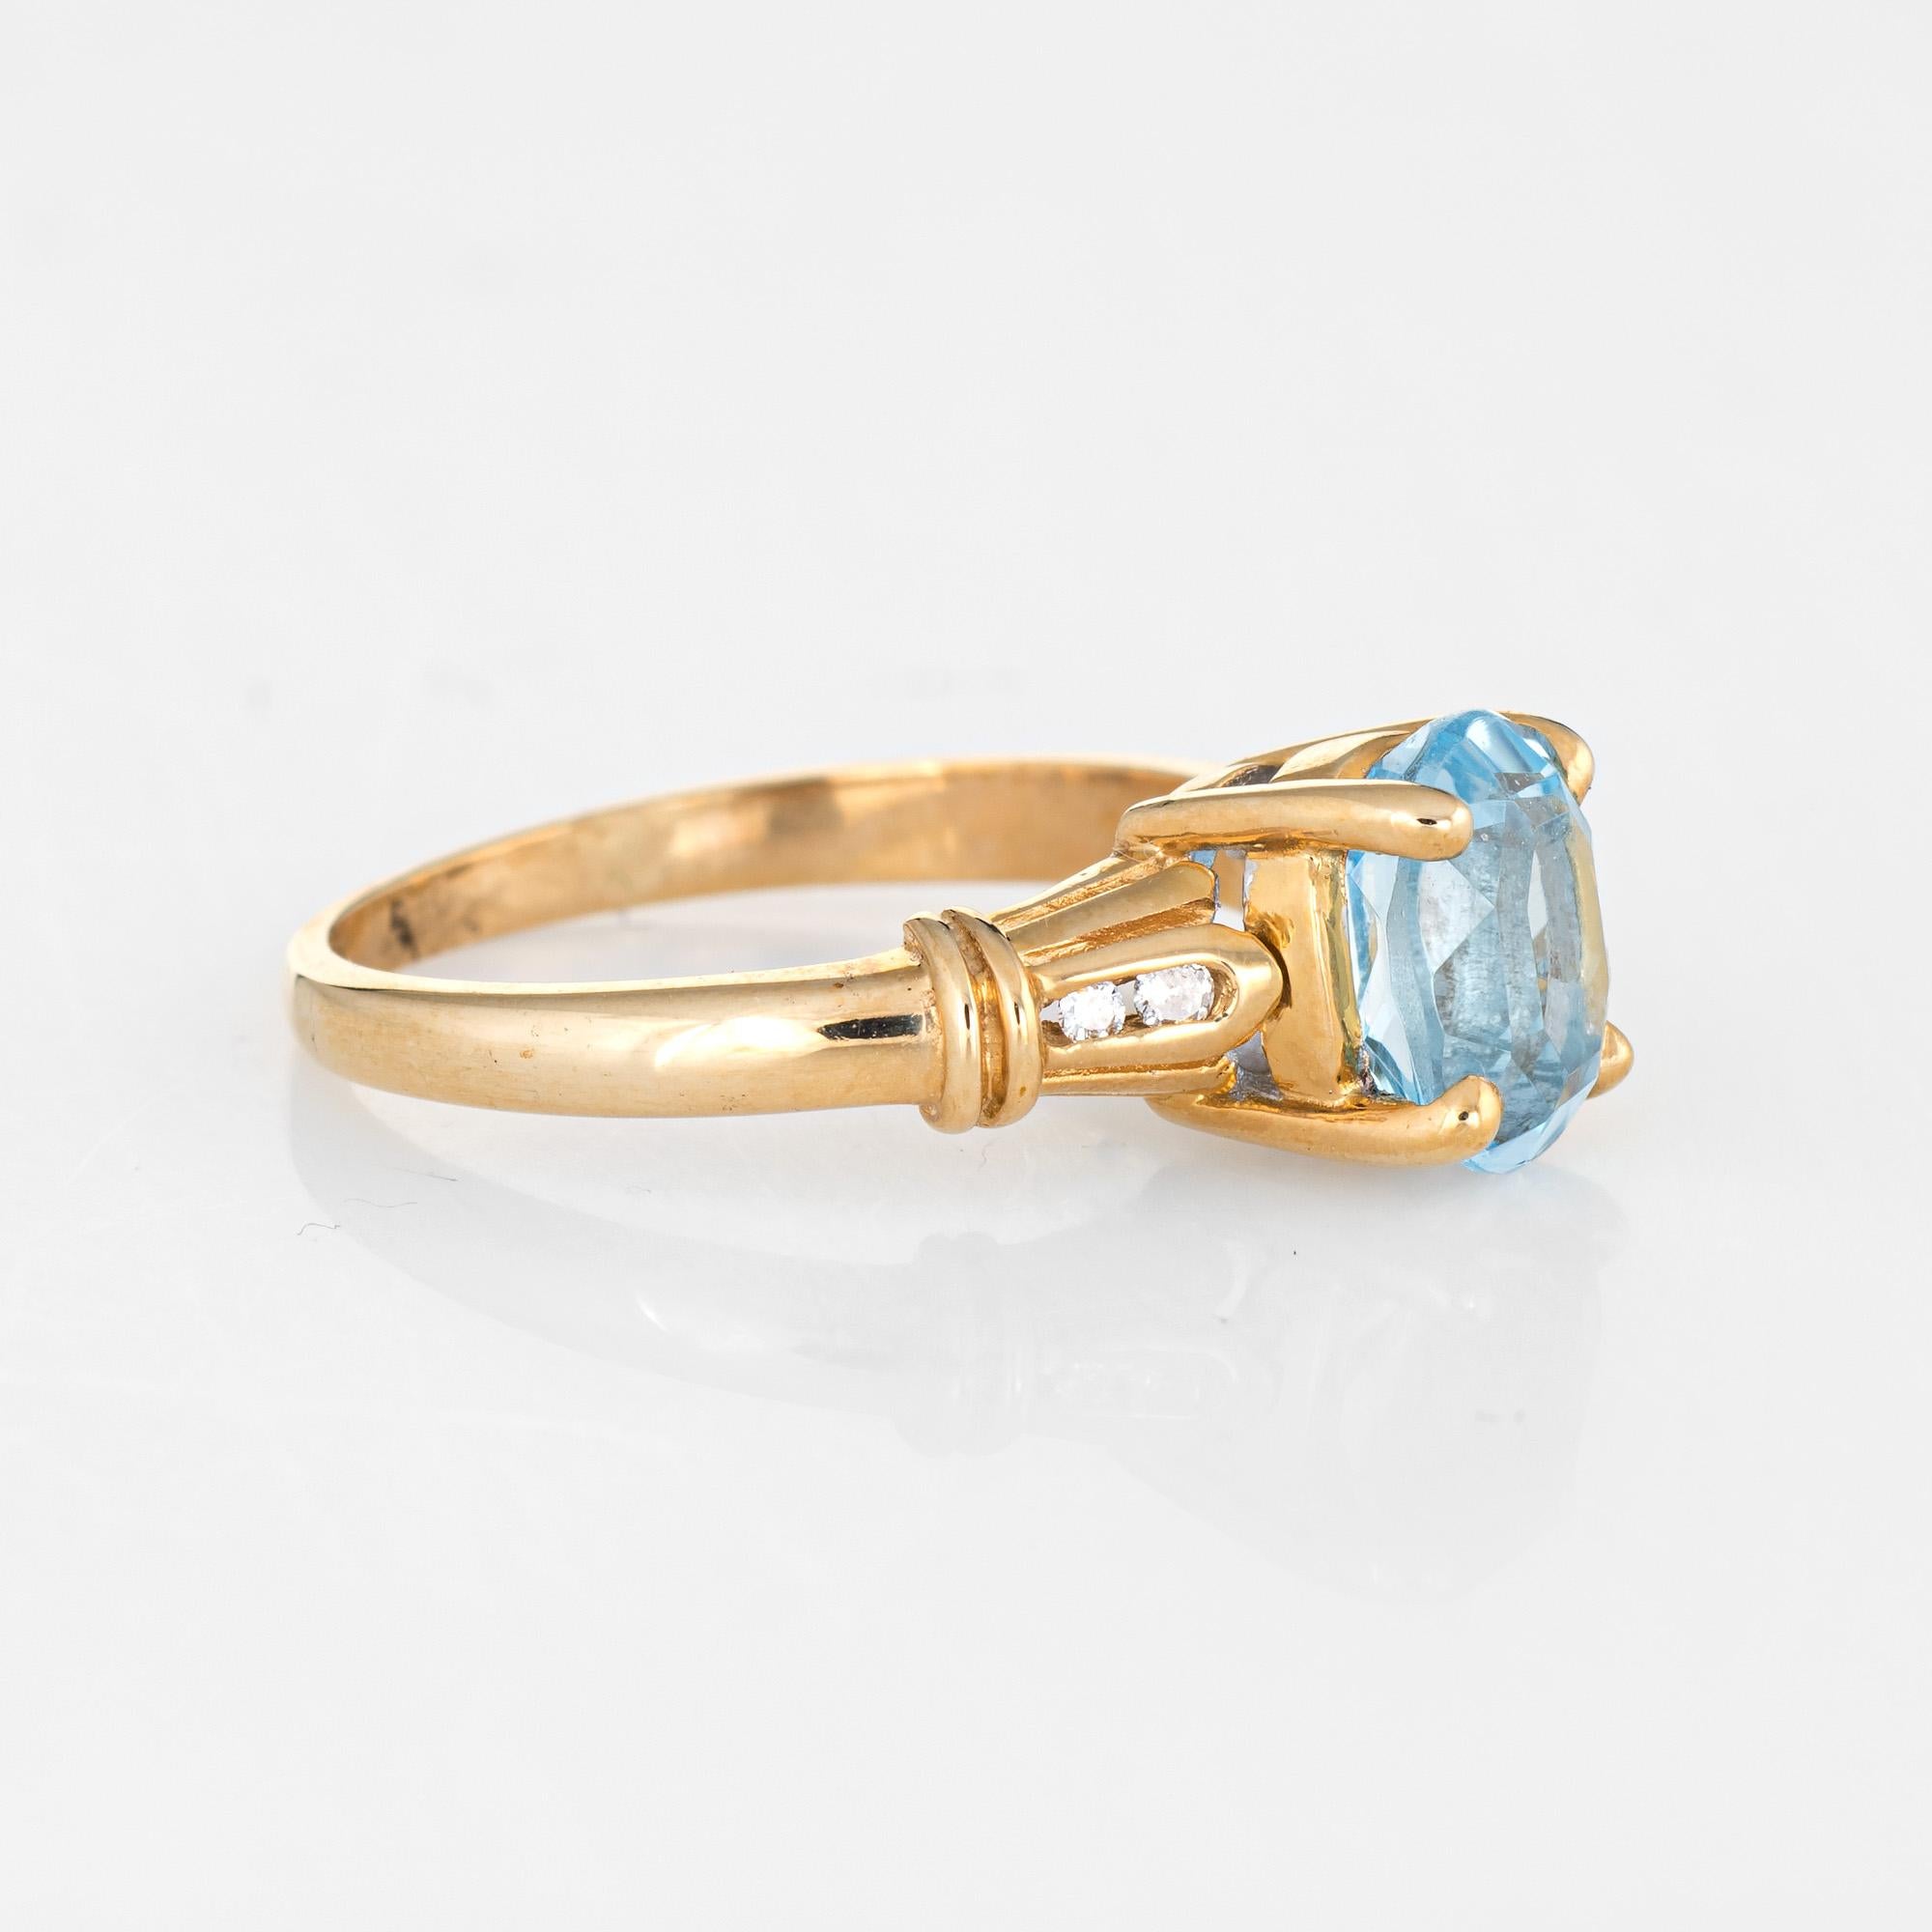 Oval Cut Blue Topaz Diamond Ring Vintage 14 Karat Yellow Gold Small Cocktail Jewelry